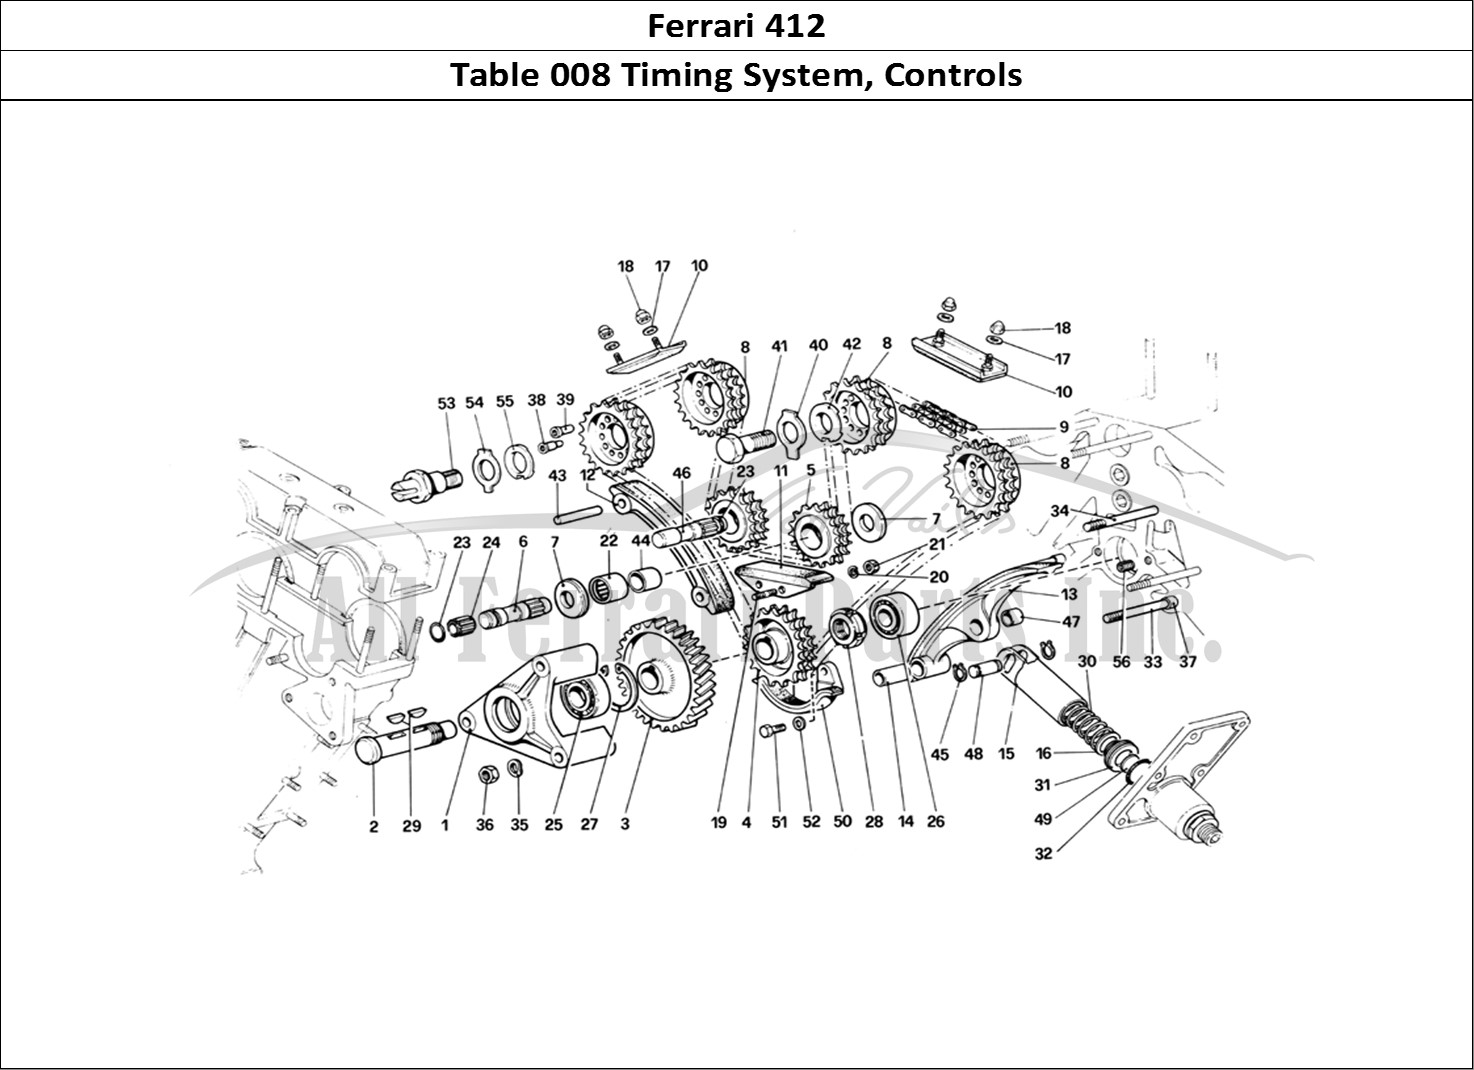 Ferrari Parts Ferrari 412 (Mechanical) Page 008 Timing System - Controls